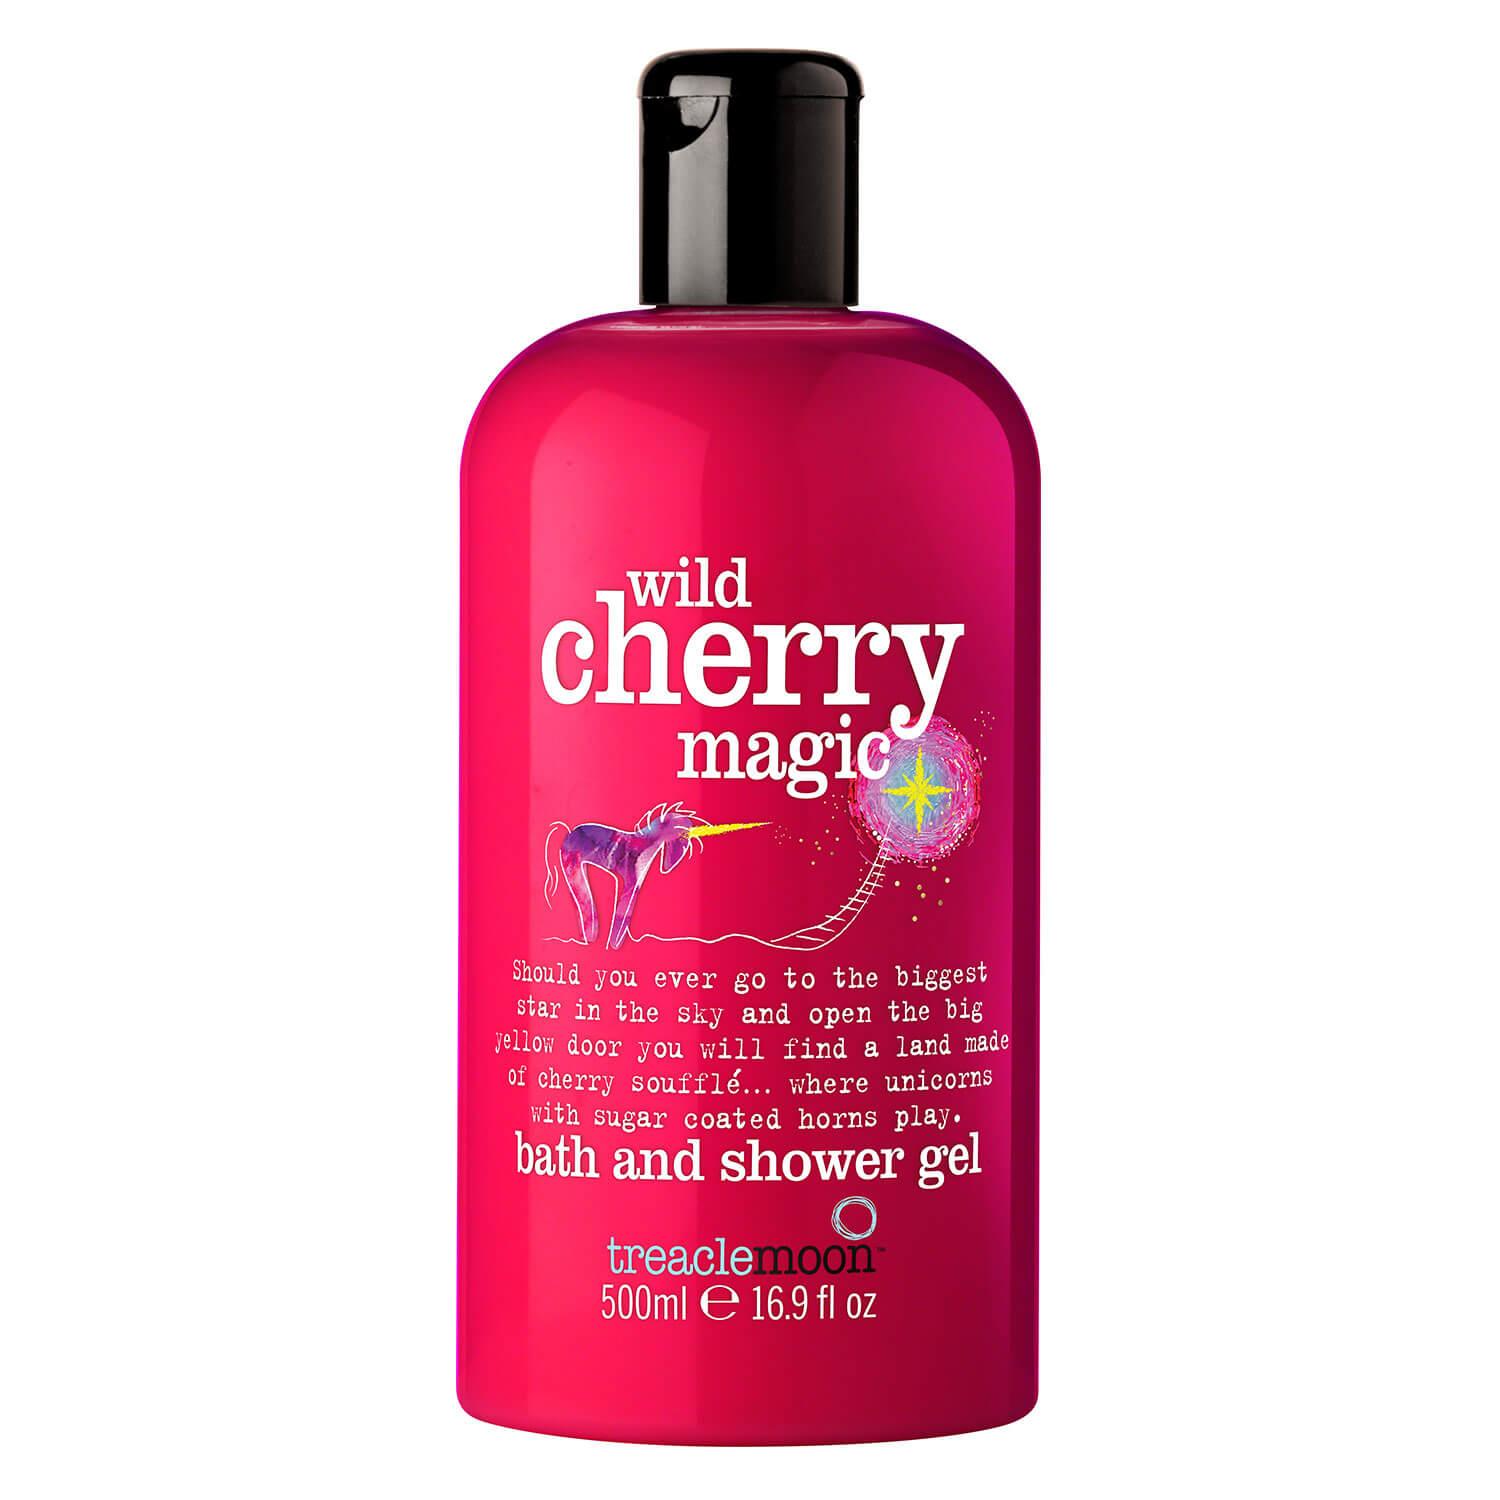 treaclemoon - wild cherry magic shower and bath gel